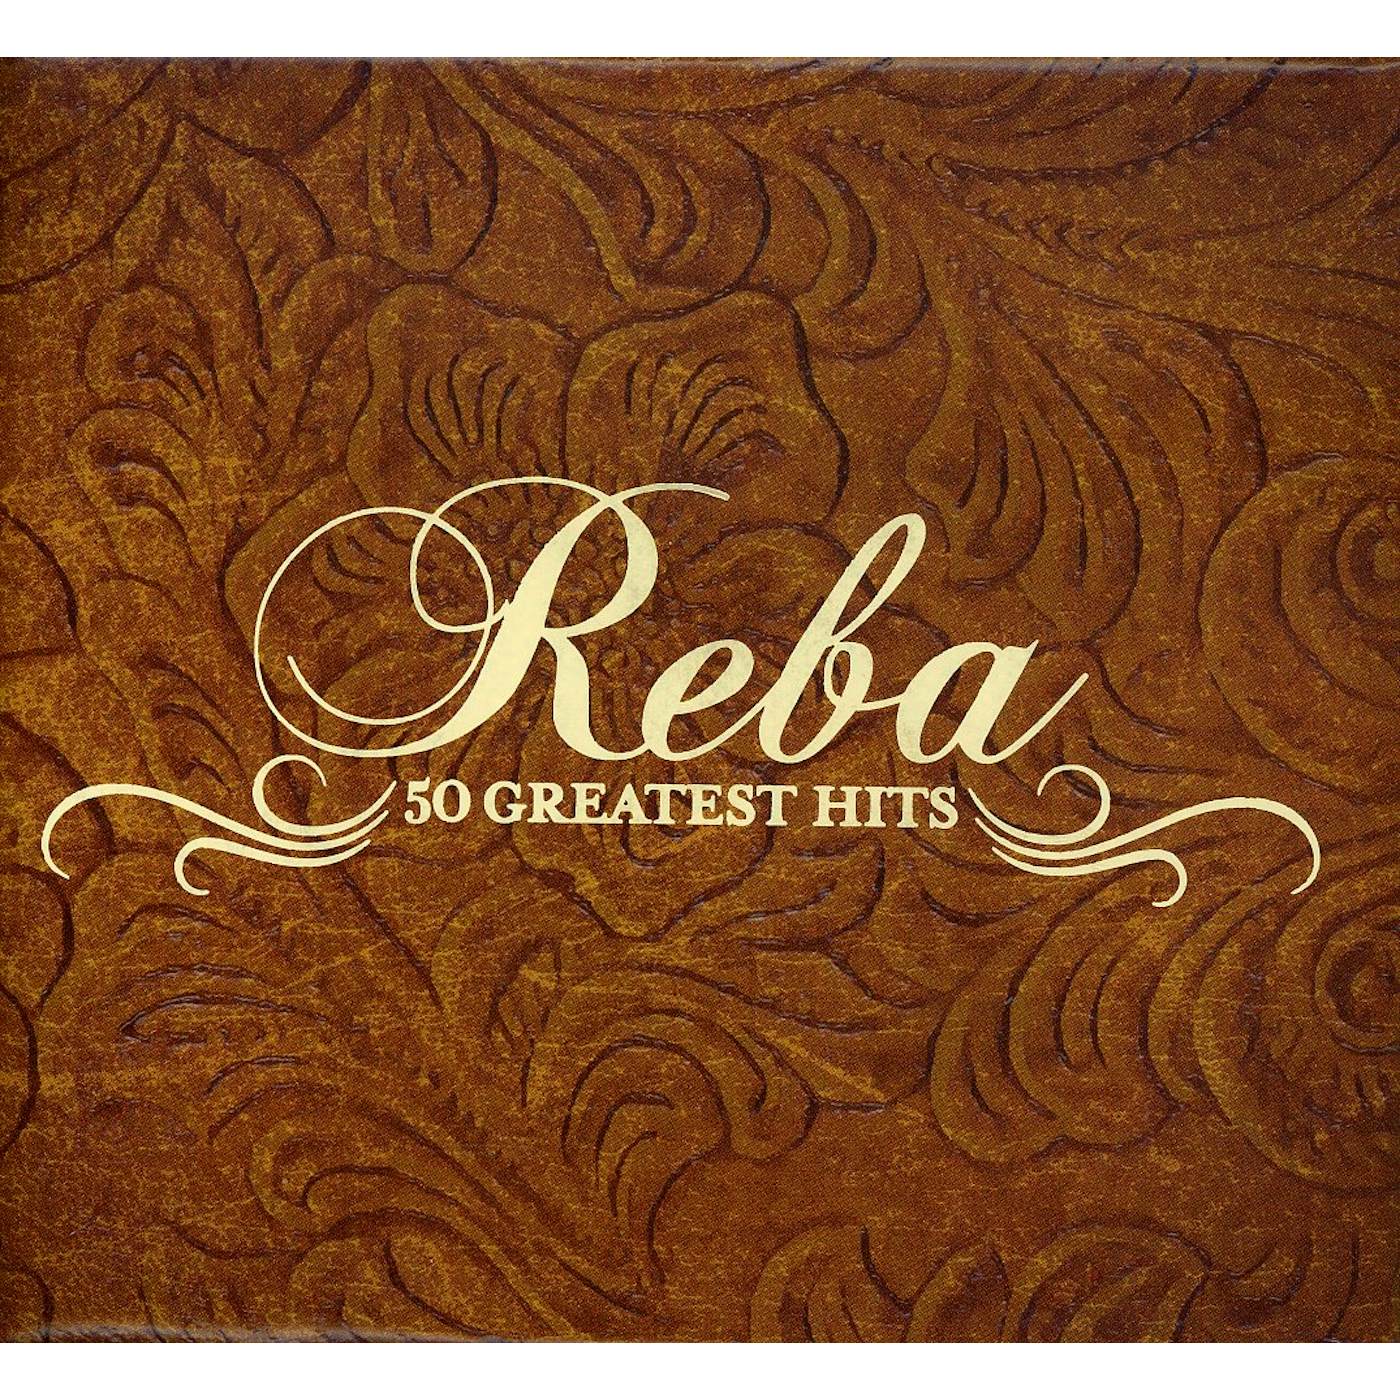 Reba McEntire 50 GREATEST HITS CD